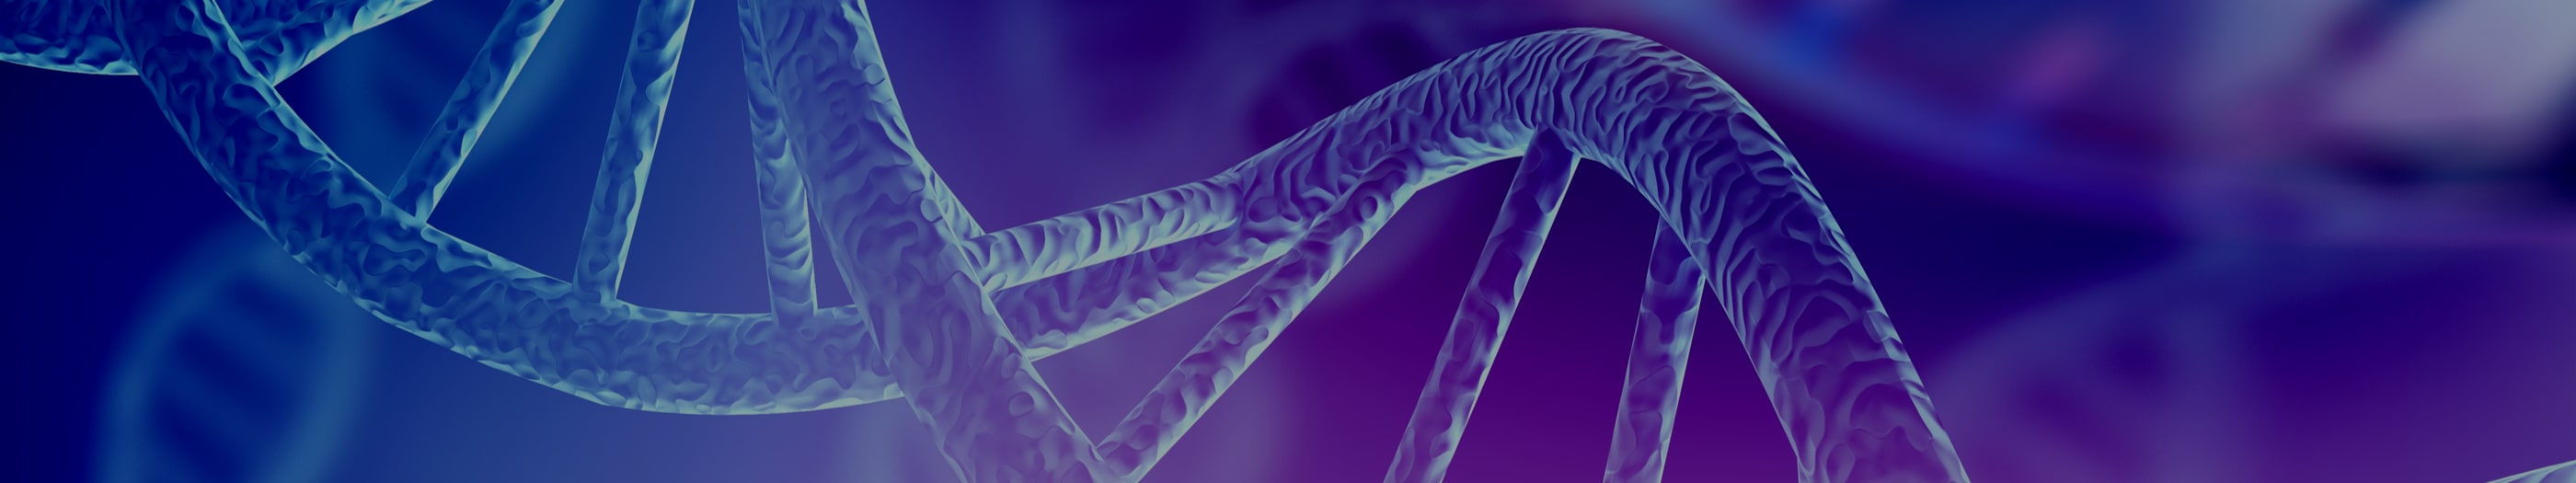 Wallpaper DNA Life Chemistry Molecule Science Biology images for  desktop section рендеринг  download